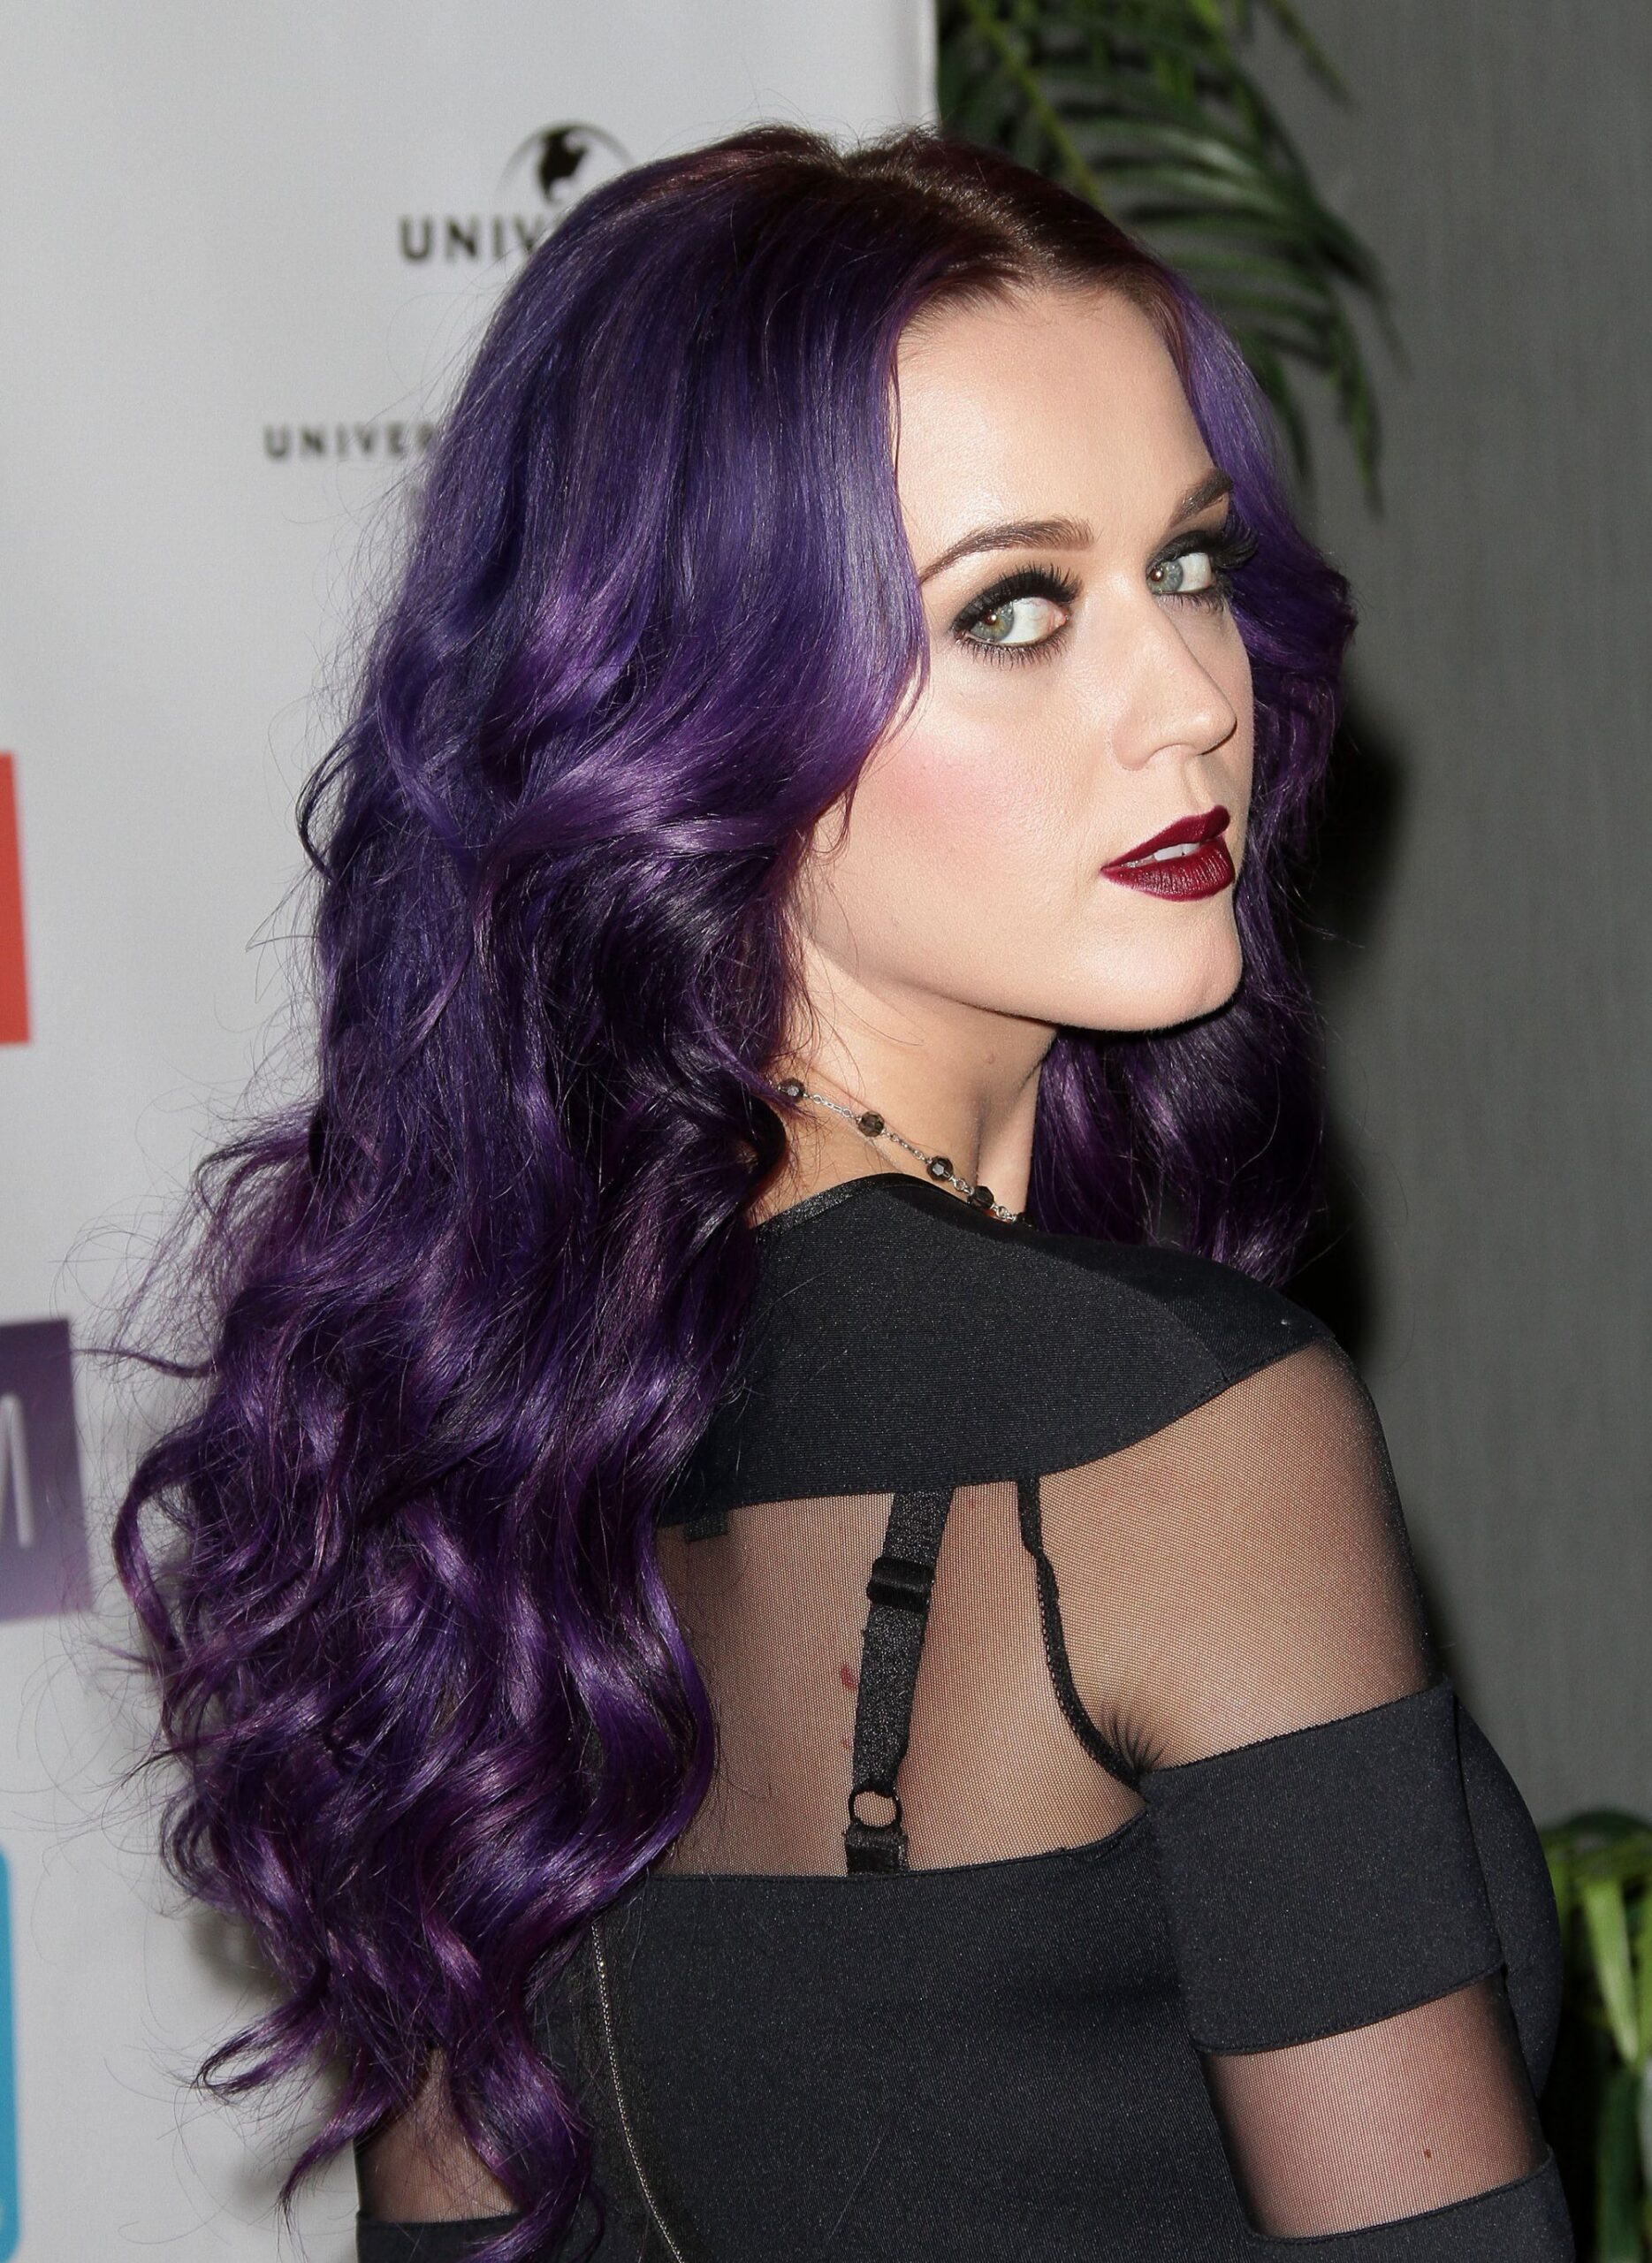 Katy Perryadopte un look plus gothique